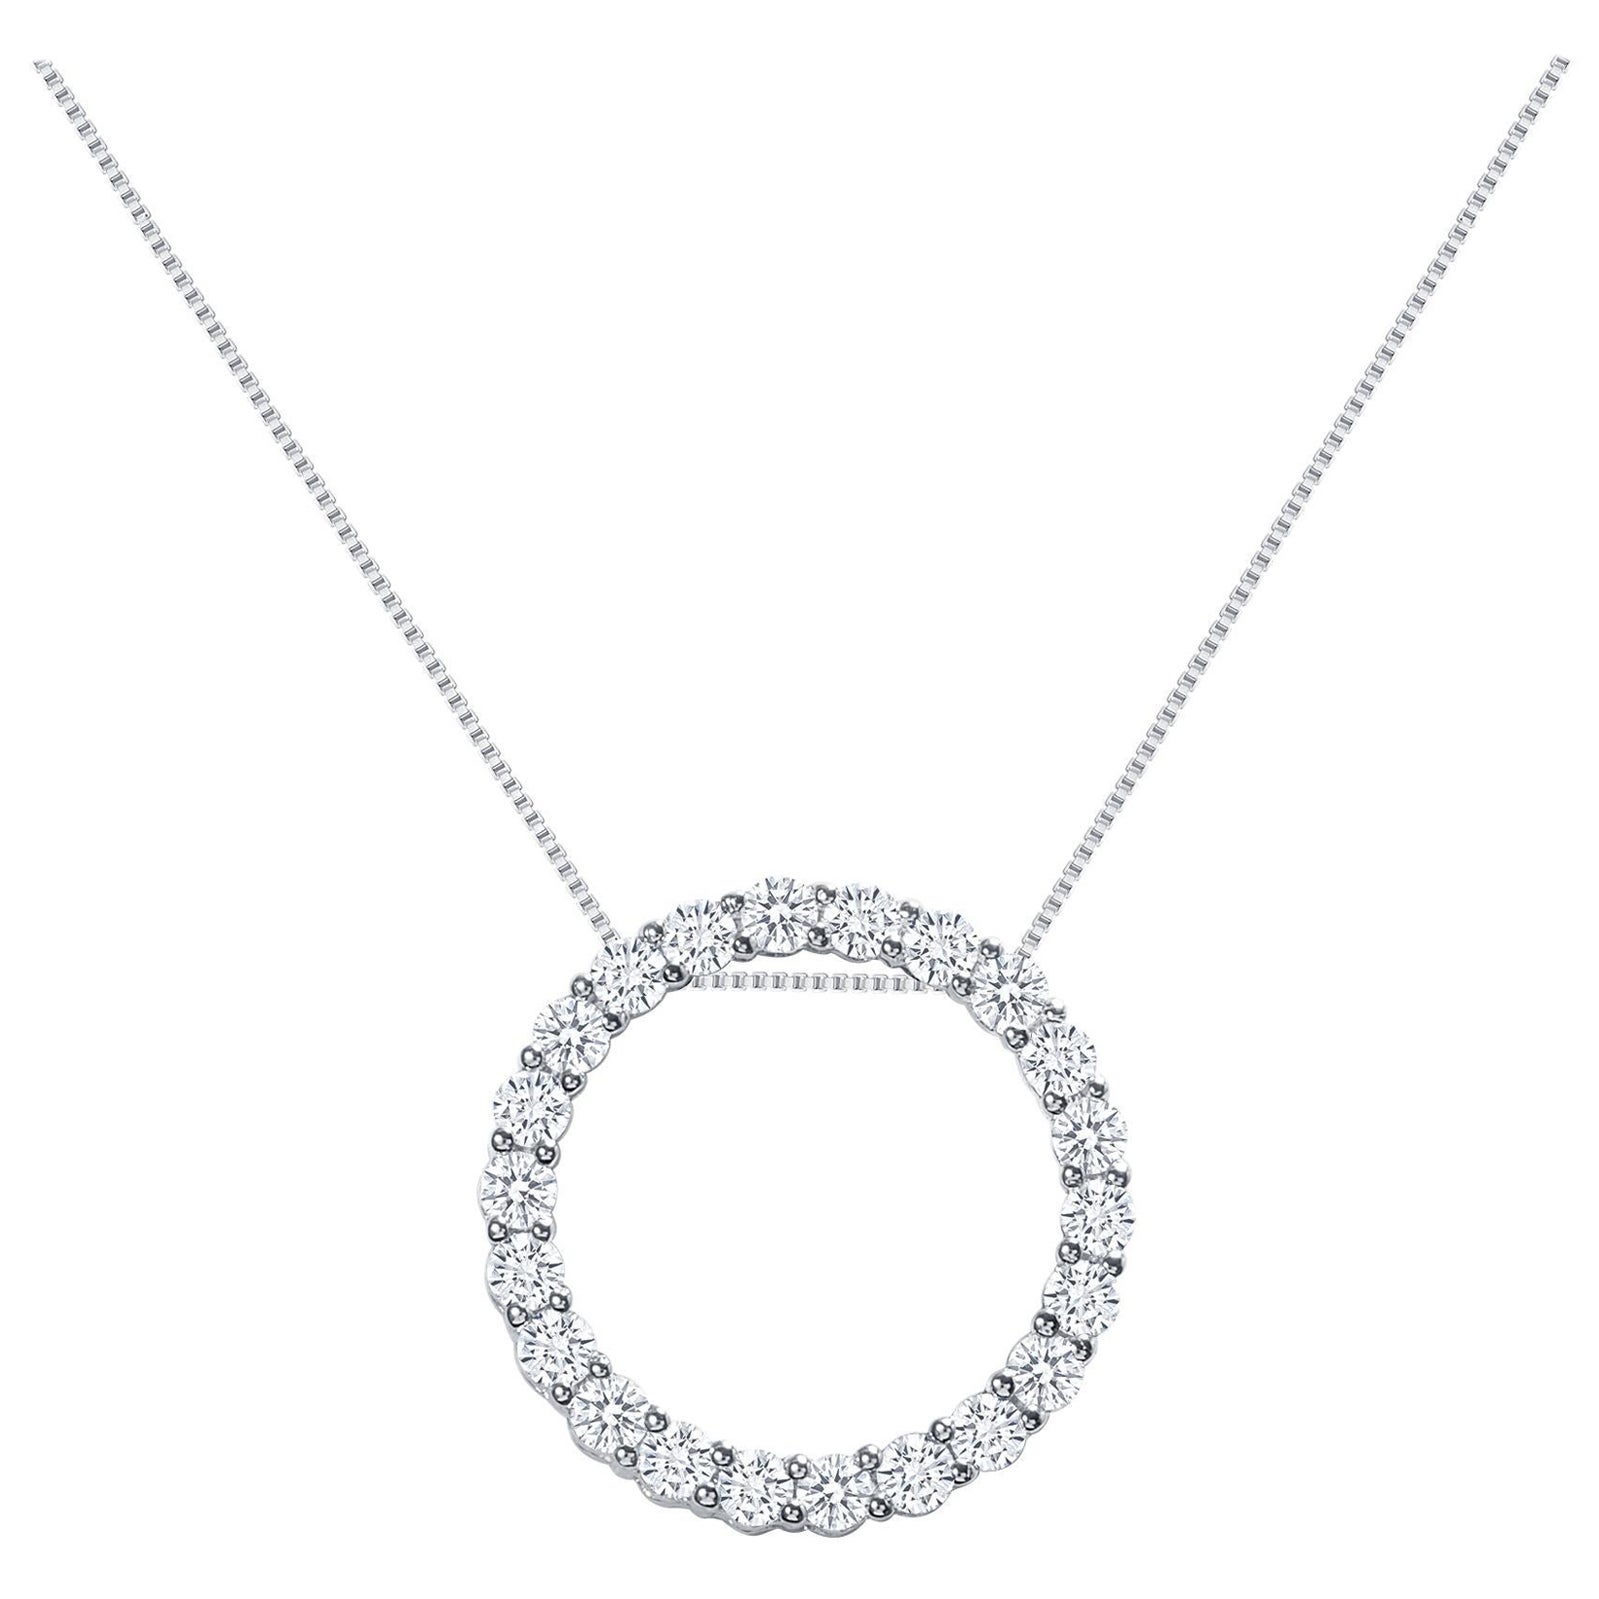 1 Carat 14k White Gold Diamond Circle Pendant Necklace